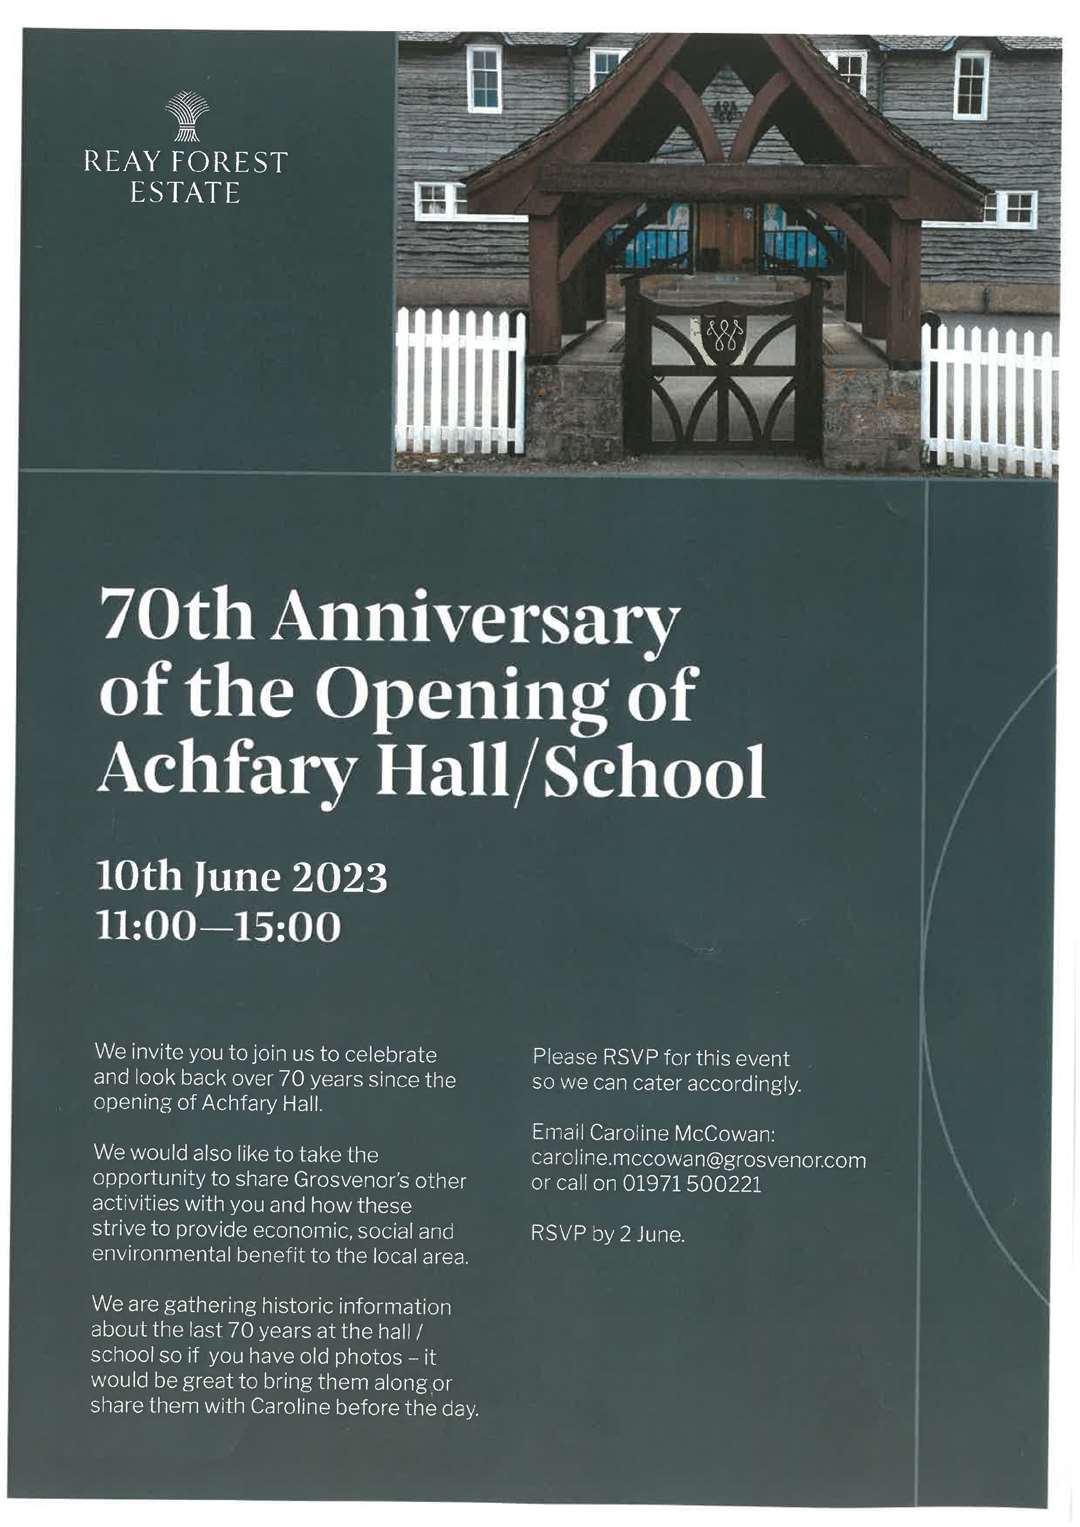 Achfary Hall